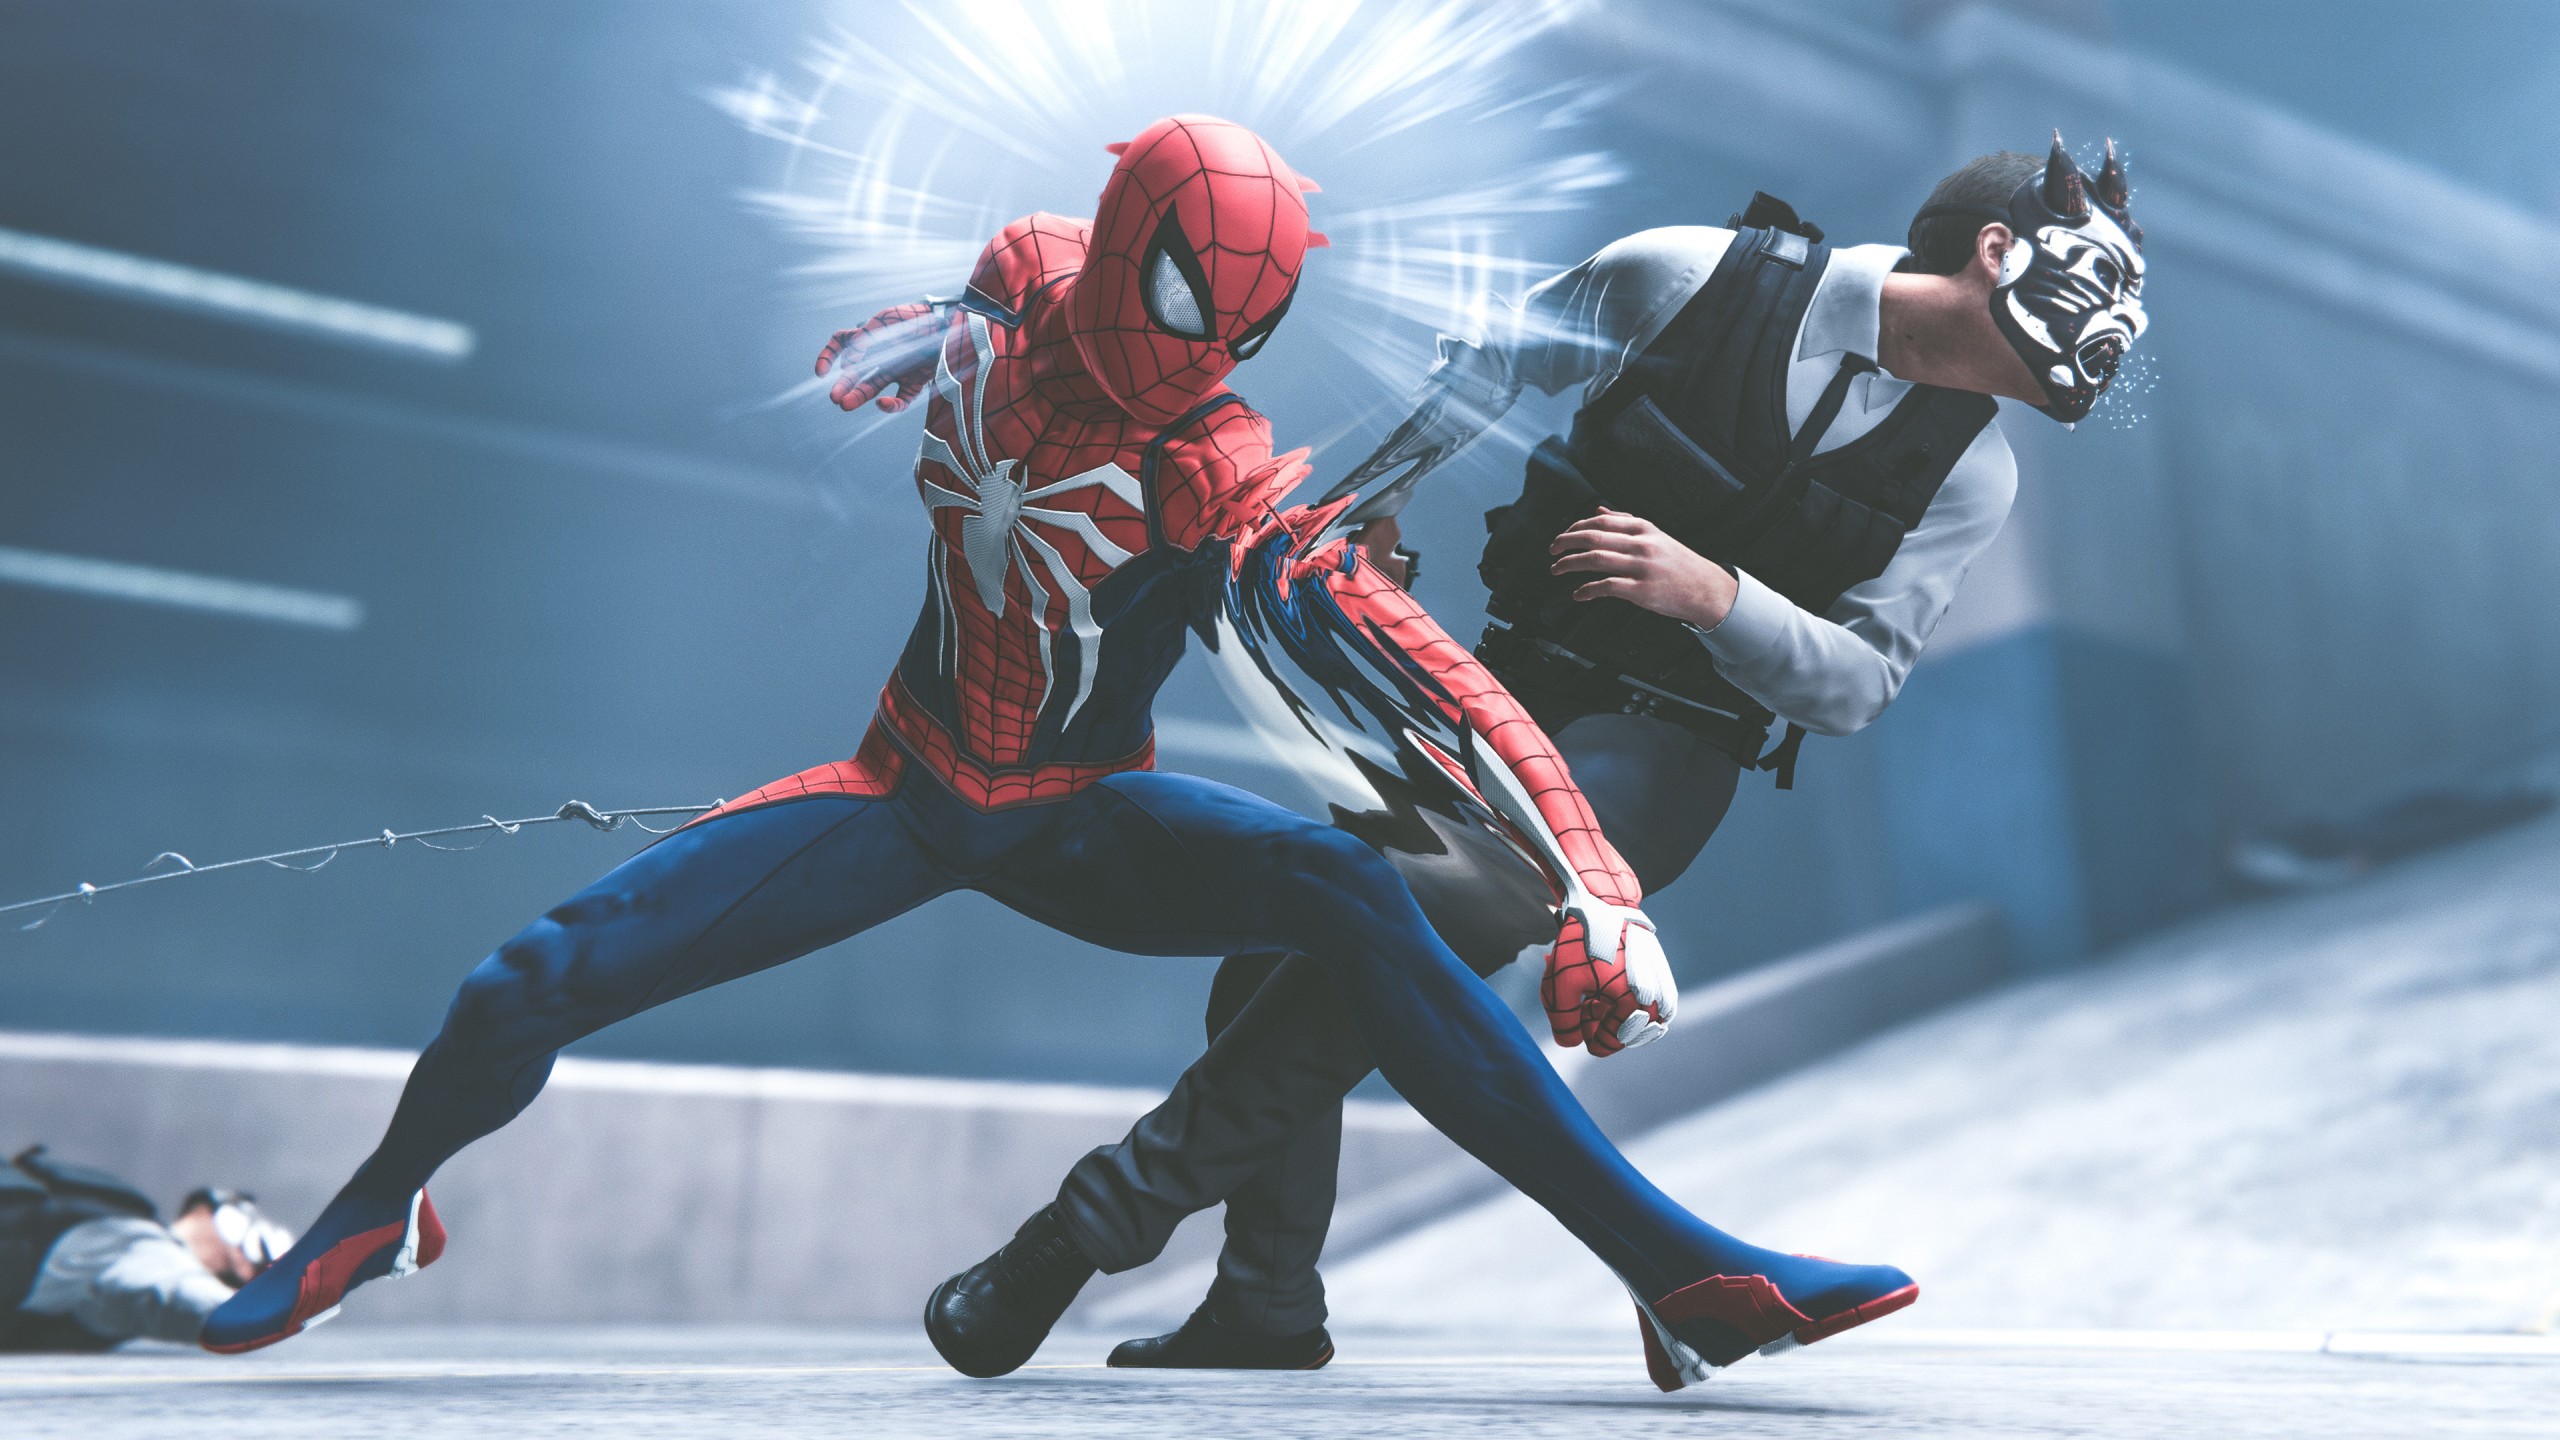 Spiderman Fighting Games